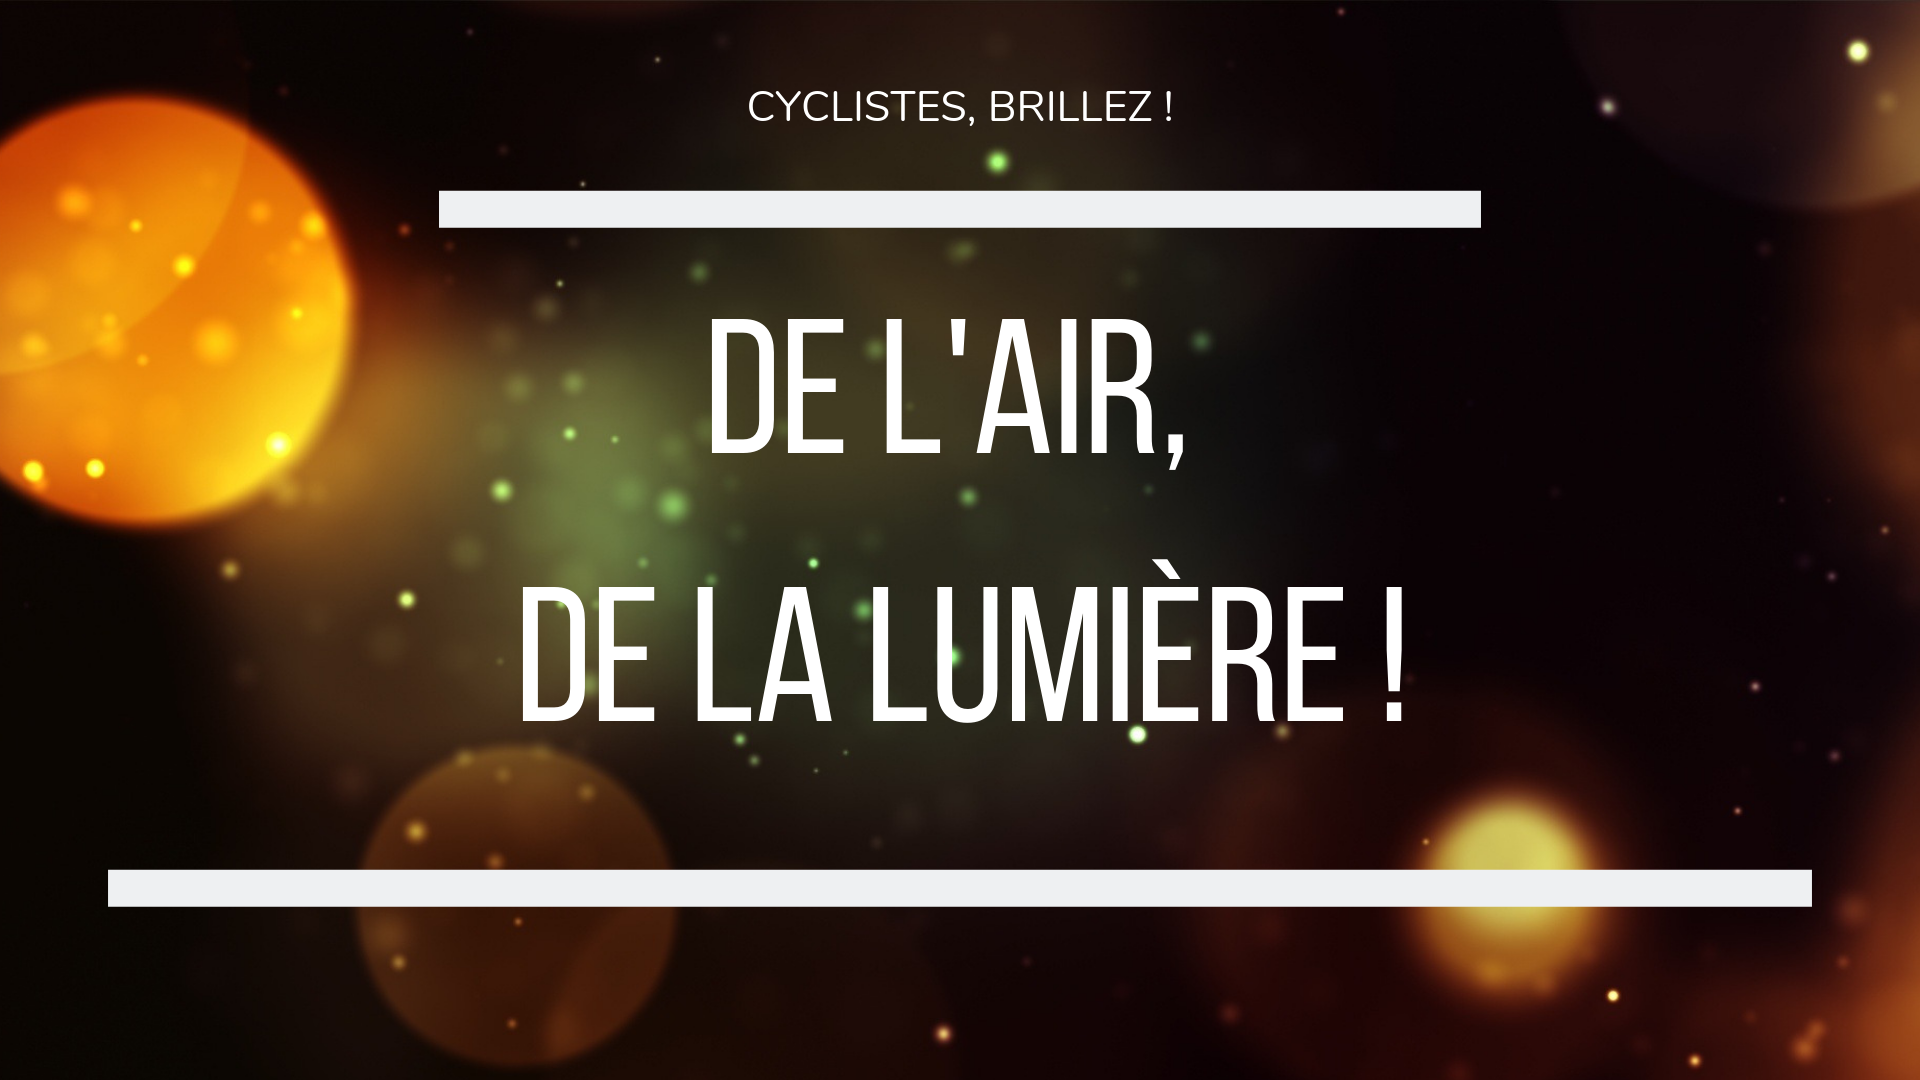 Maison_Velo_Lyon_cyclistes_brillez_air_lumiere